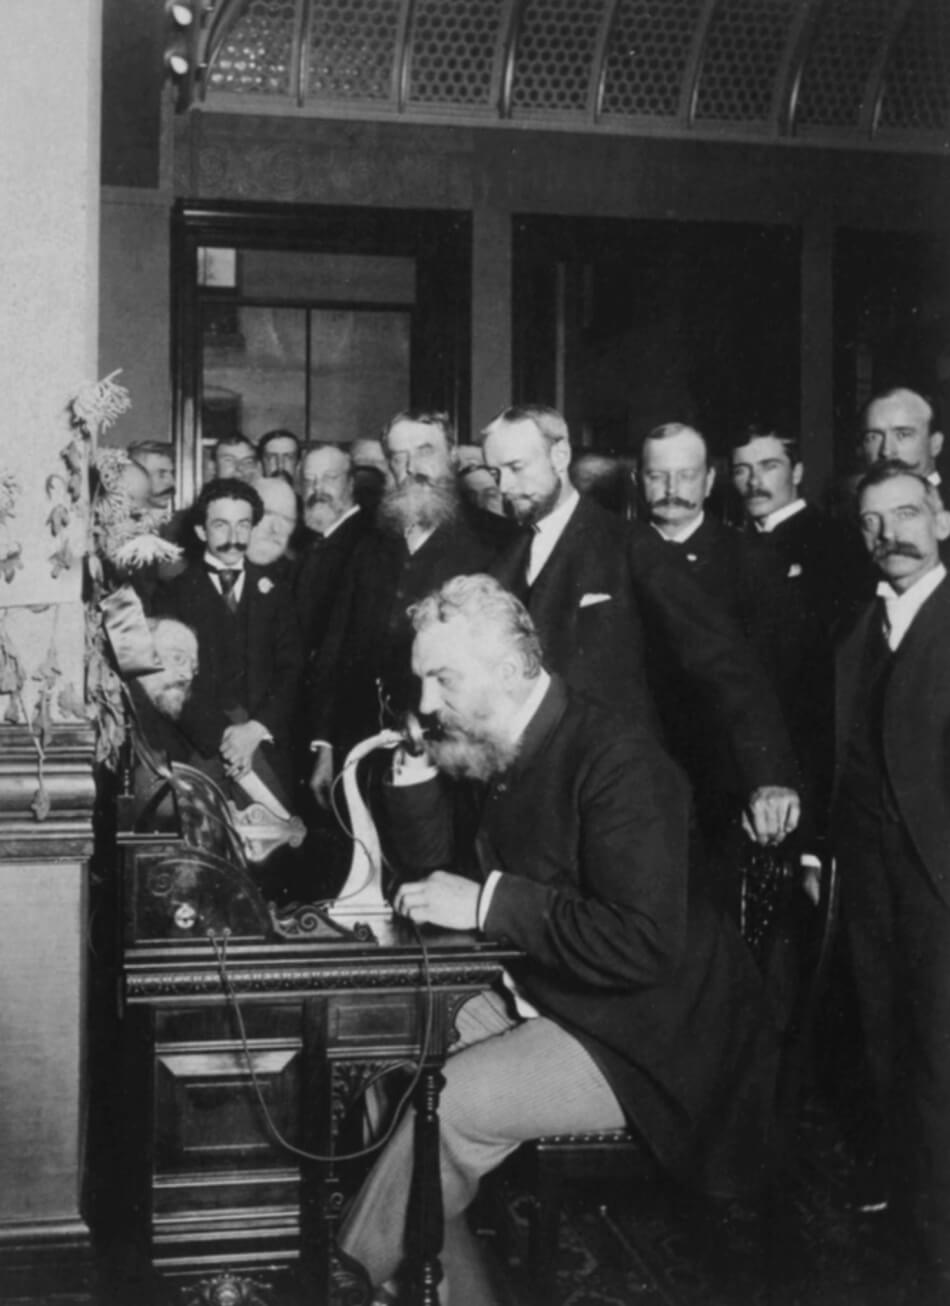 Alexander Graham Bell opening the New York–Chicago telephone line.